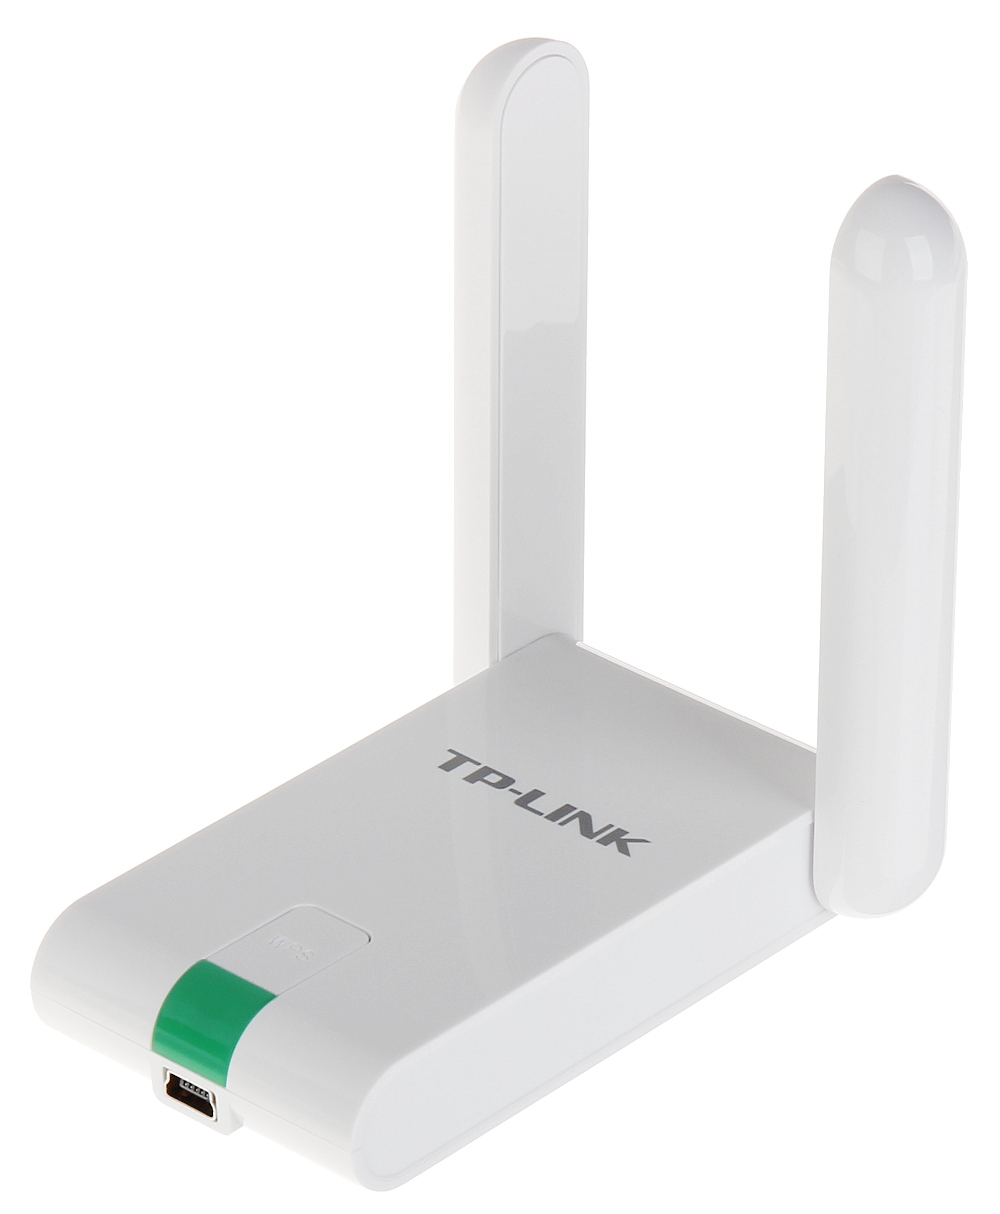 TP-Link TL-WN822N 300Mbps High Gain WiFi Wireless USB Adapter 3dBi Antenna B/G/N 